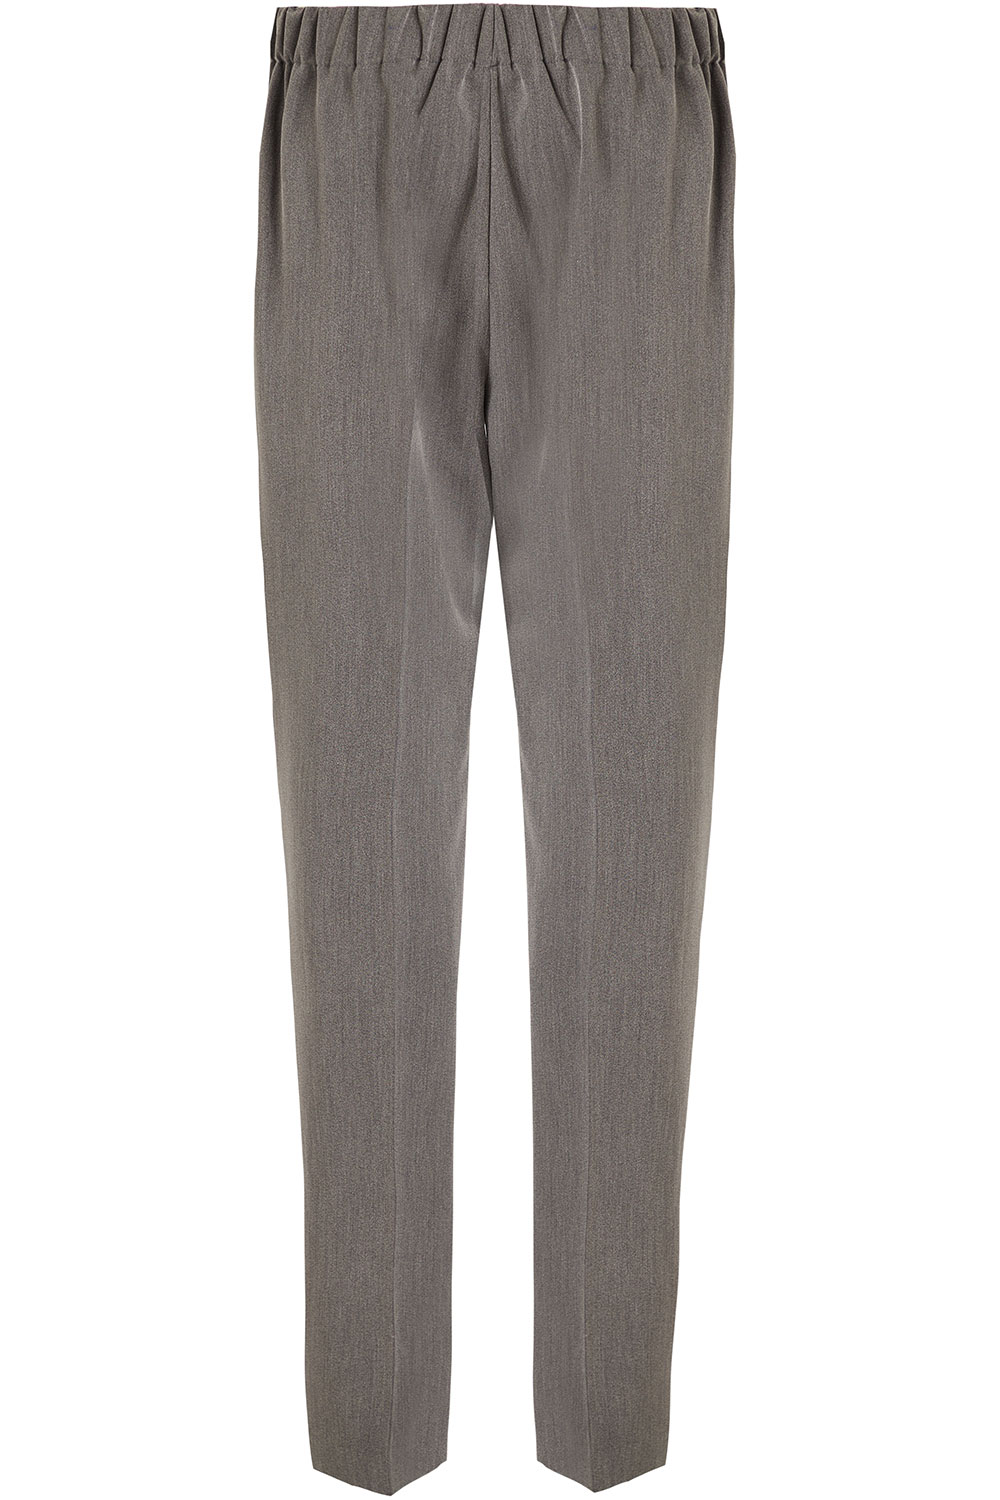 Grey Straight Leg Elasticated Trousers | Bonmarché